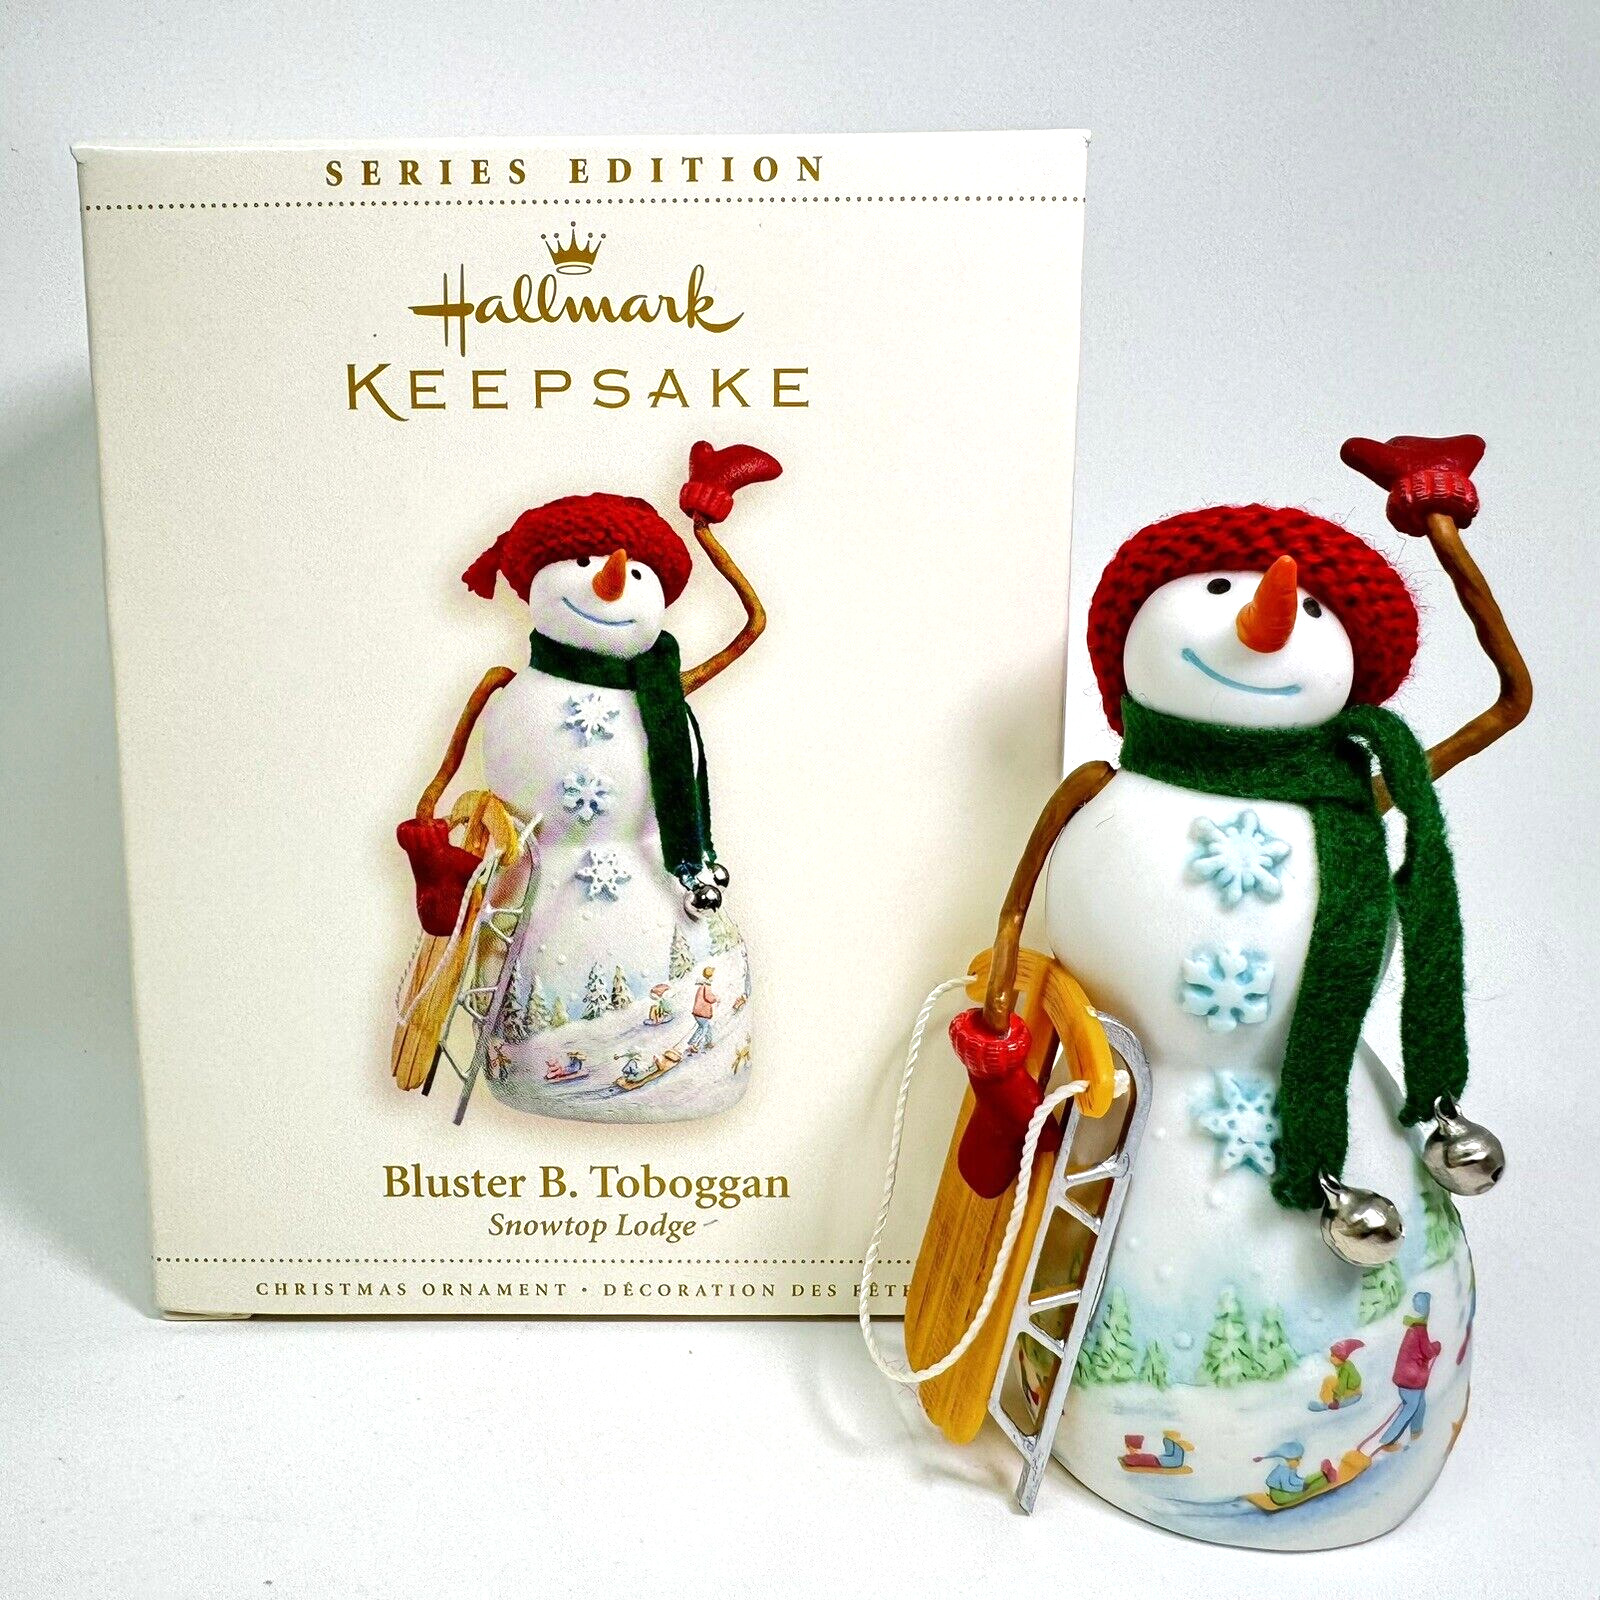 2006 Hallmark Keepsake Ornament - BLUSTER B TOBOGGAN - #2 SNOWTOP LODGE Snowman